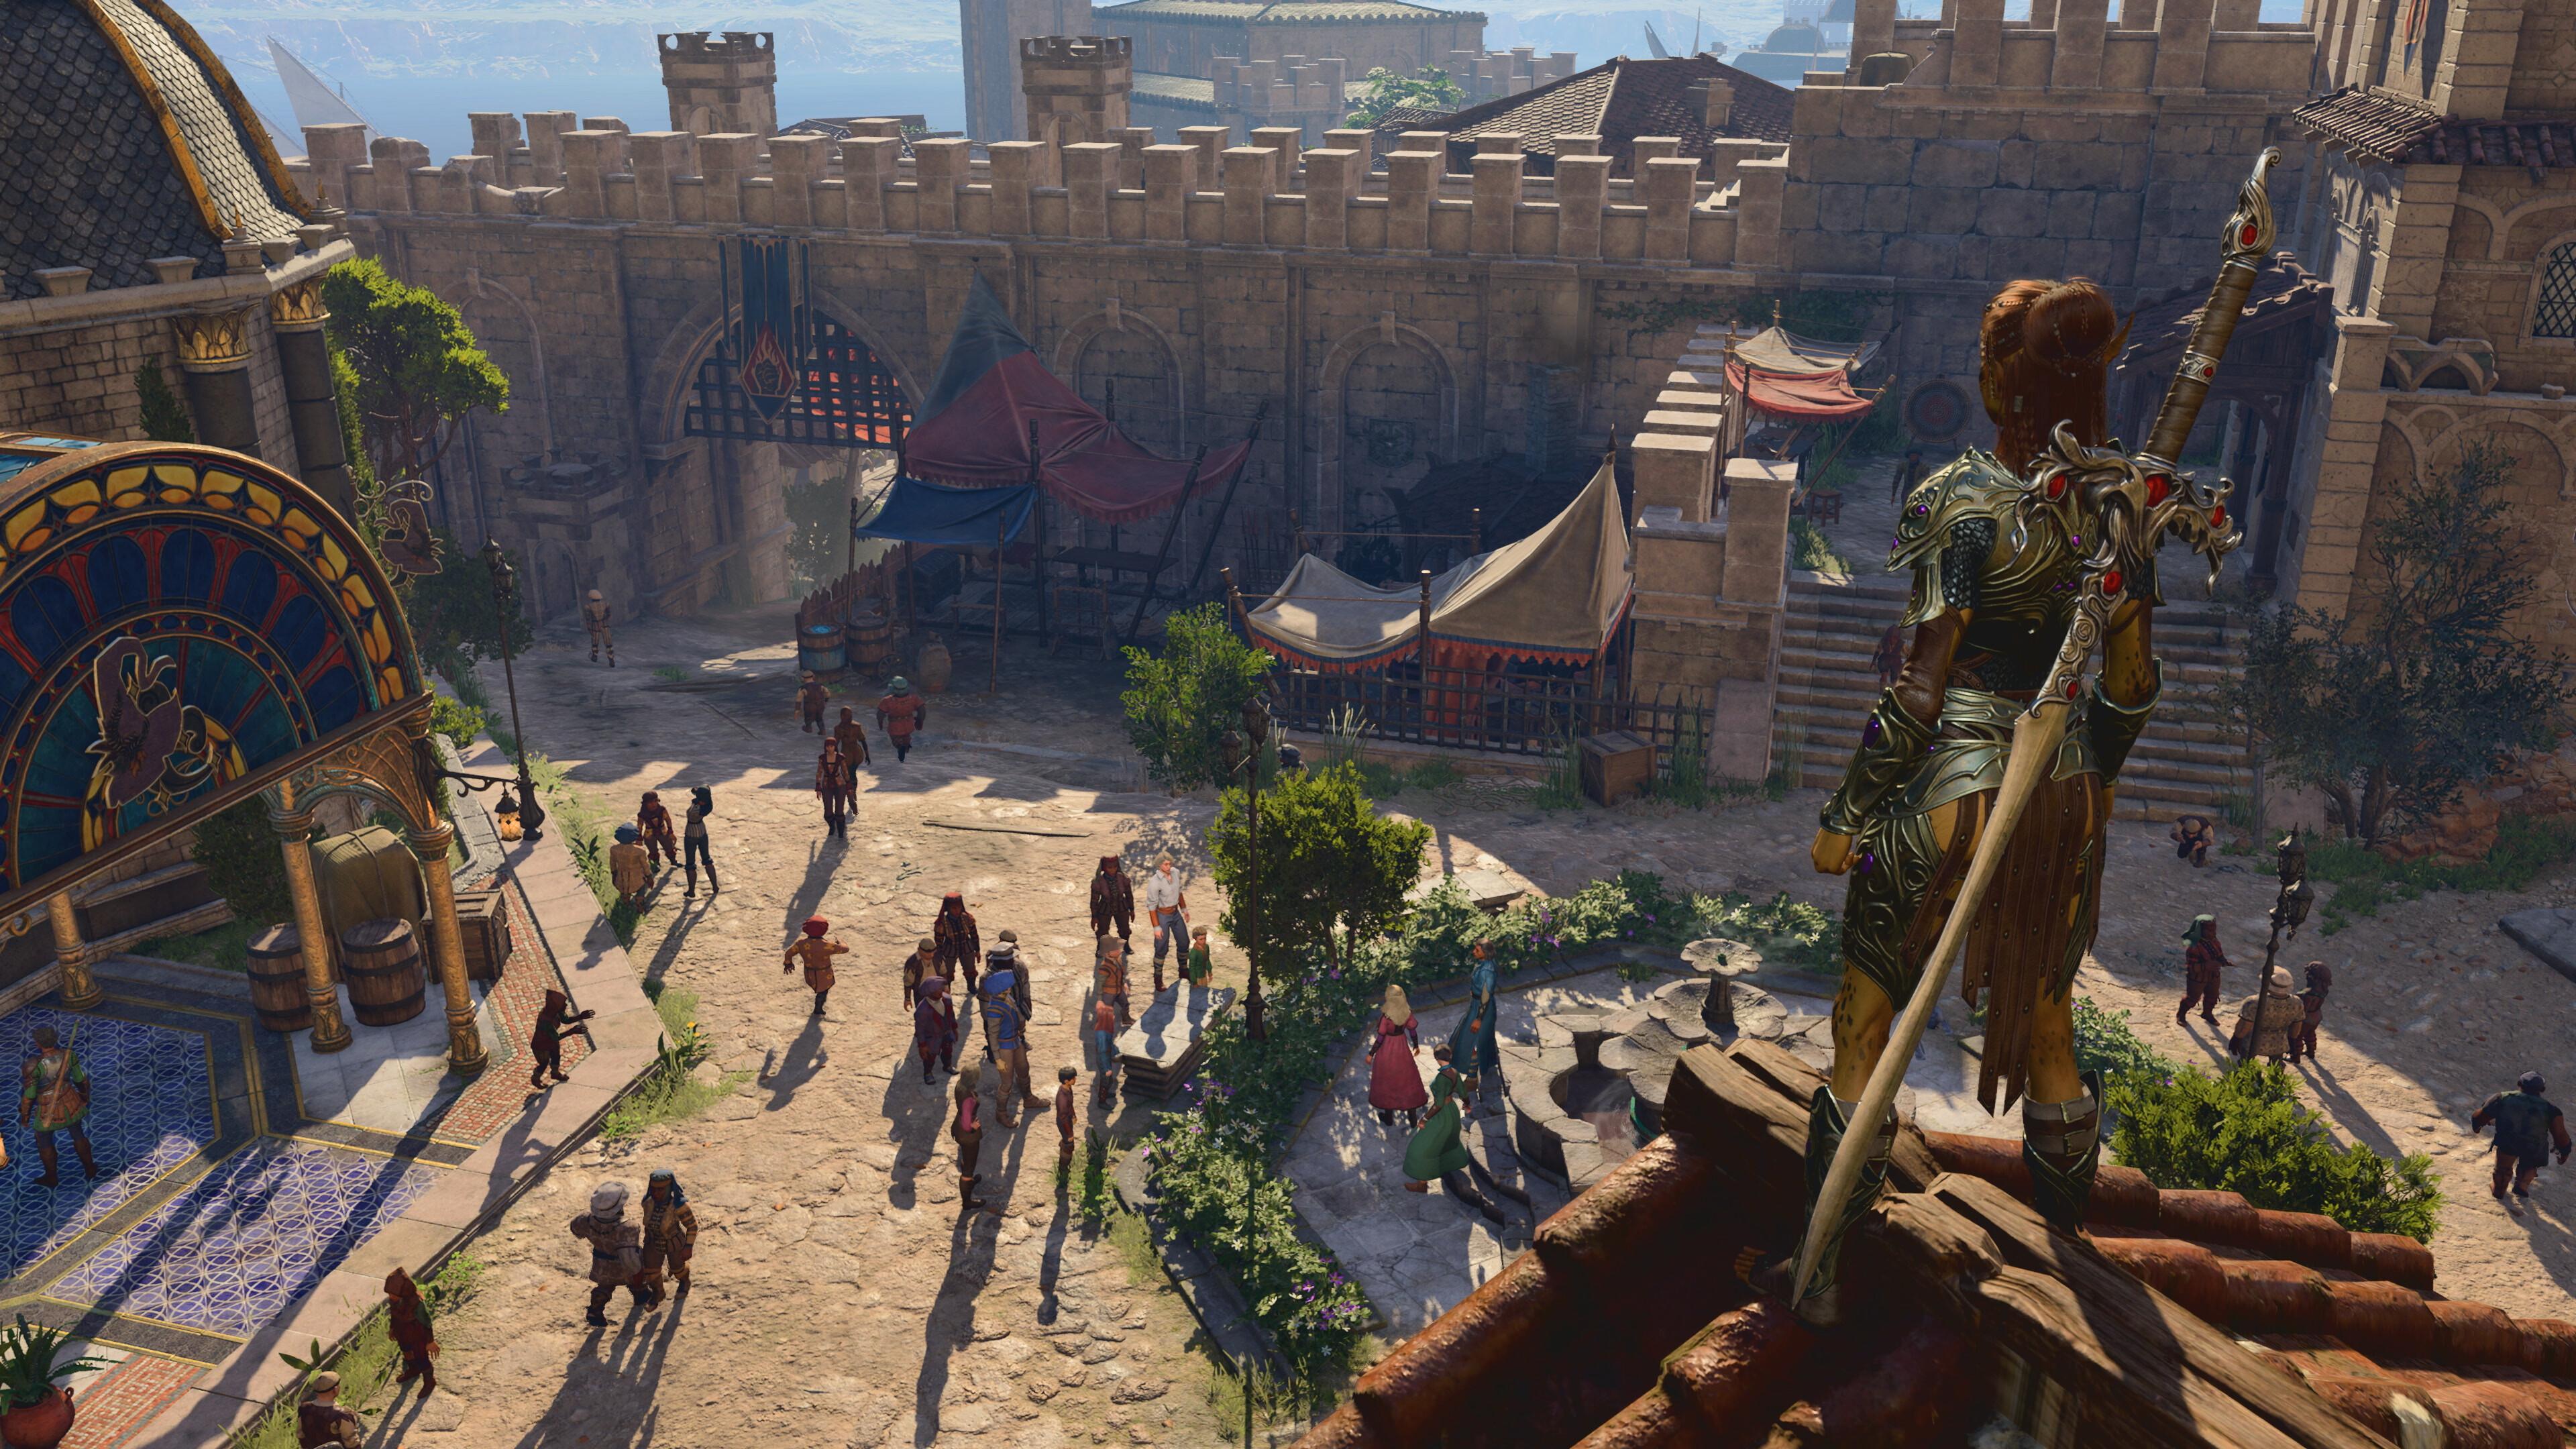 A screenshot of the game Baldur's Gate 3